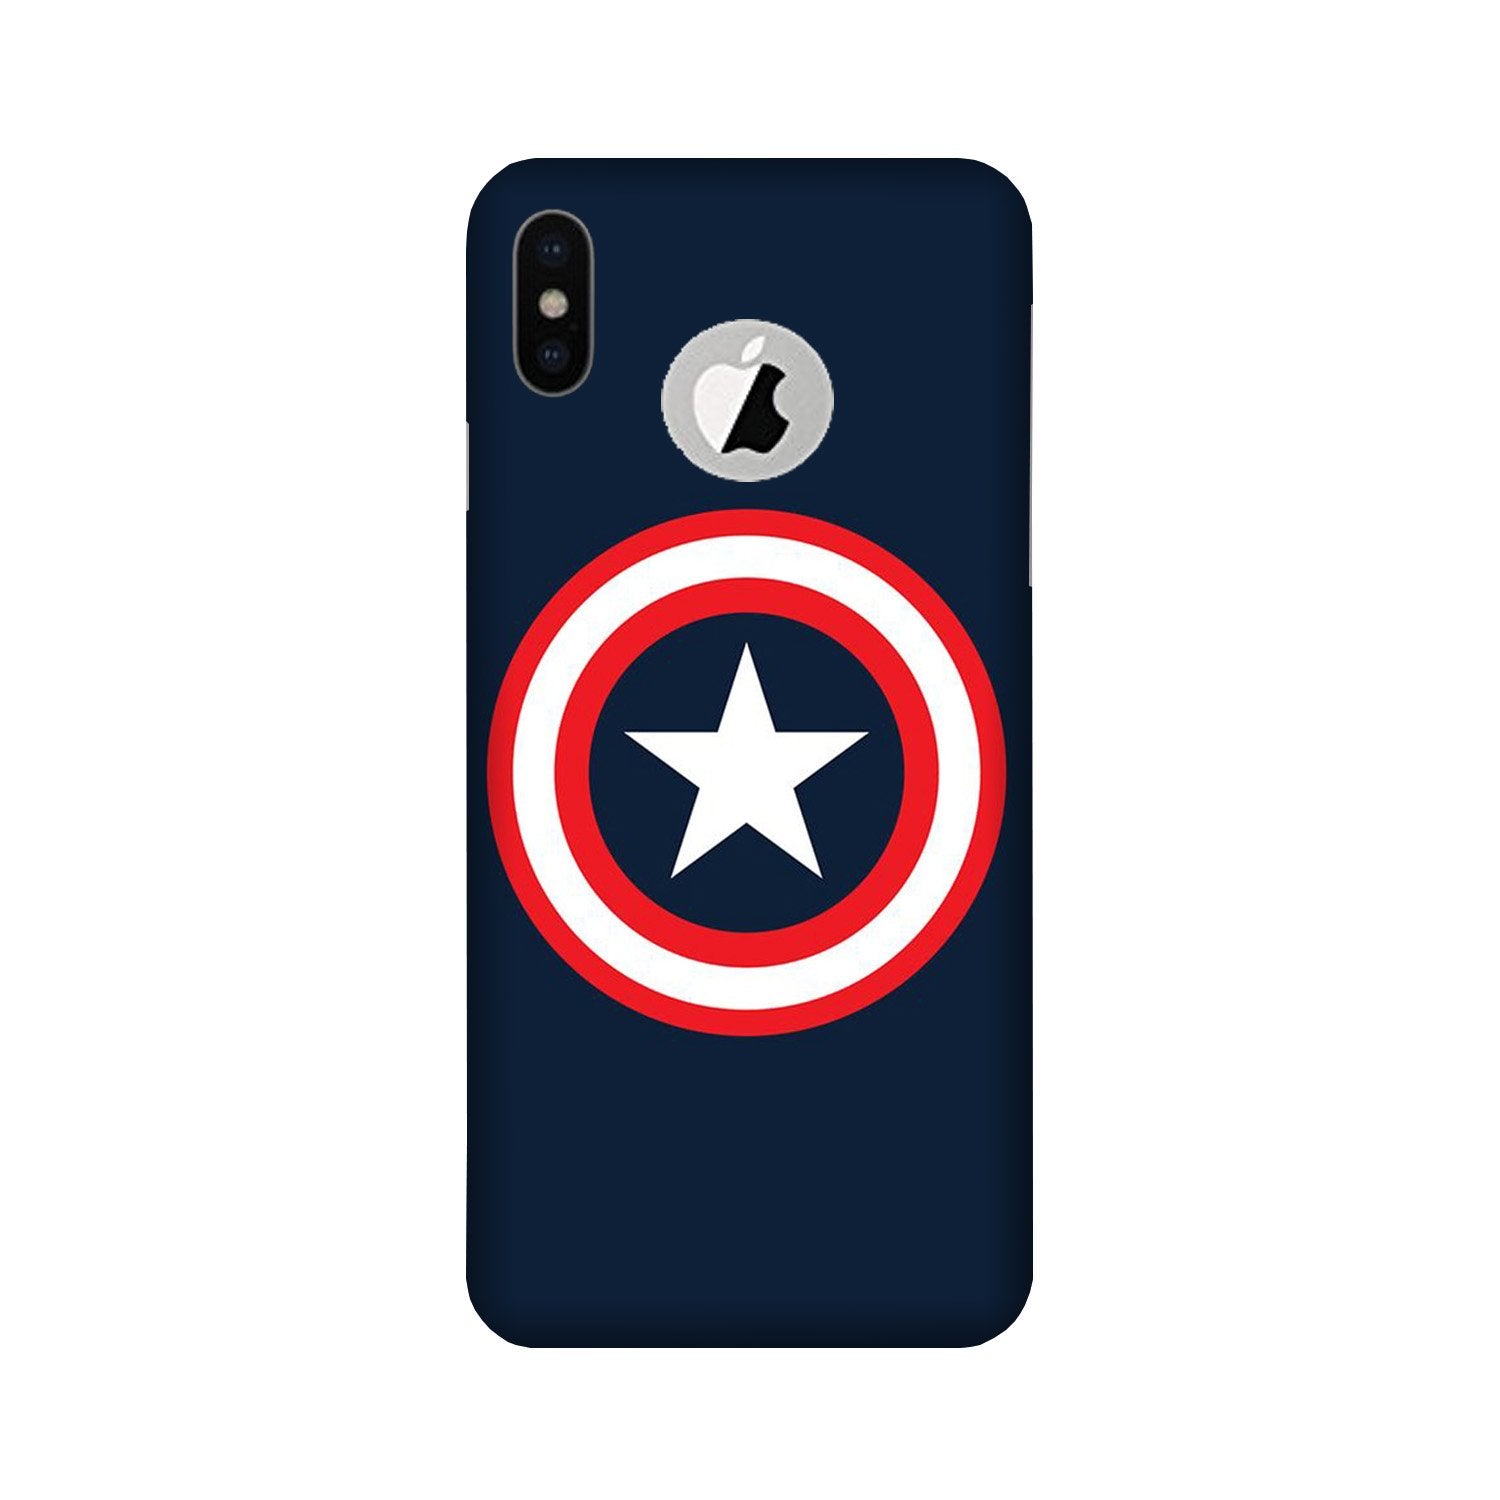 Captain America Case for iPhone X logo cut